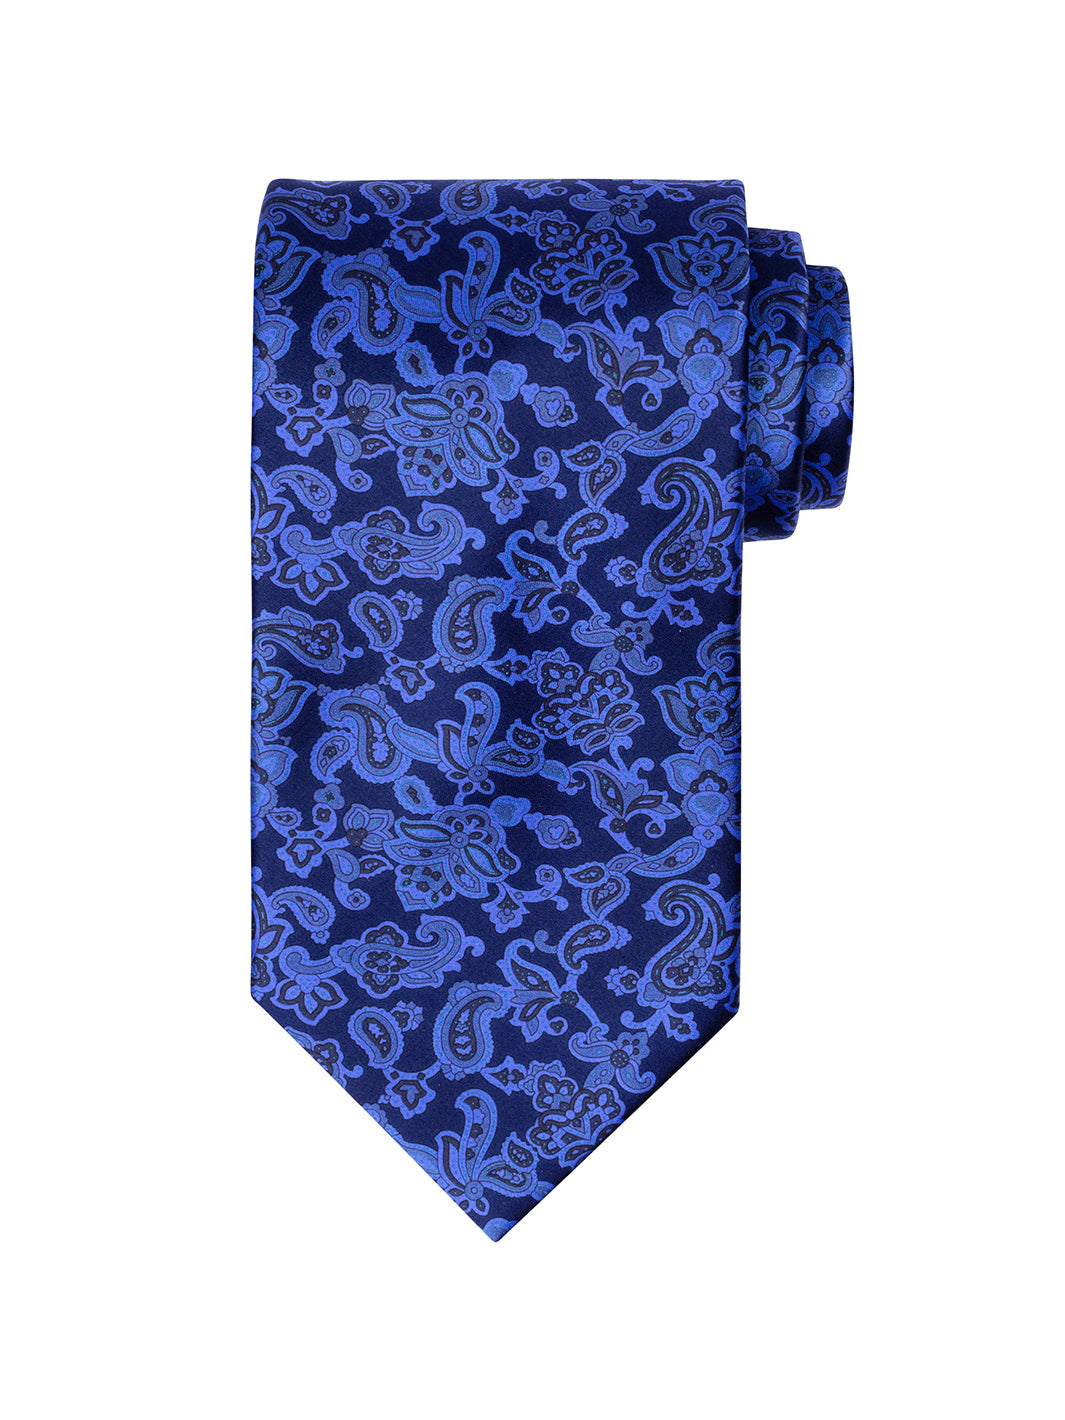 Men's Stefano Ricci Paisley Tie - Black and Blue